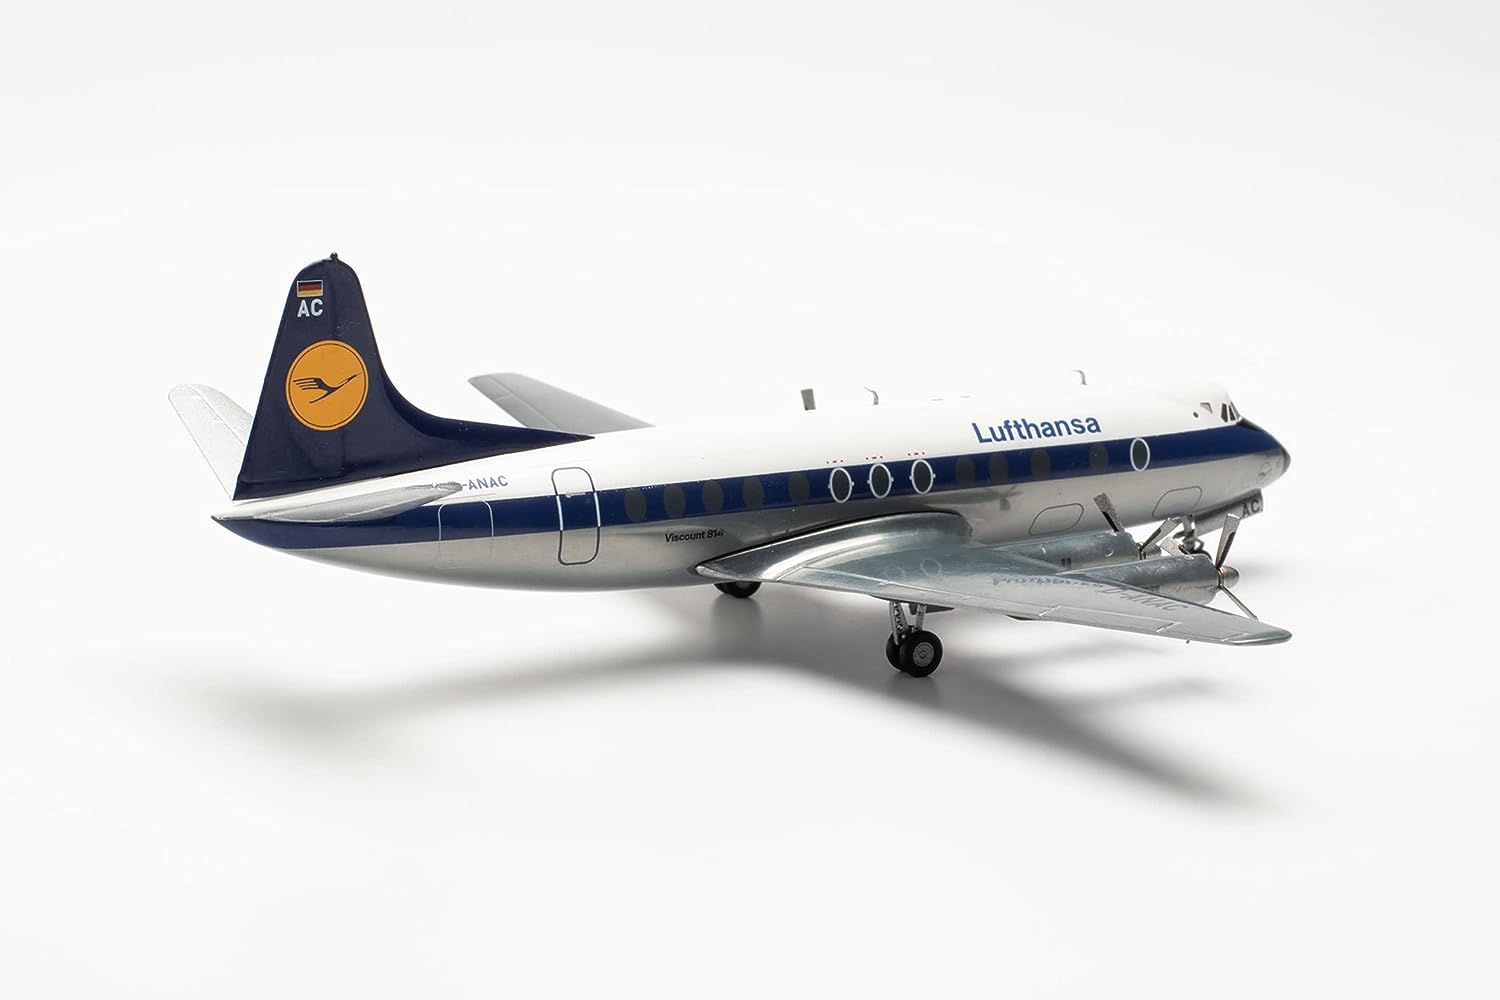   Vickers Viscount 800 Lufthansa, 1:200, herpa 572255. # 1 hobbyplus.ru